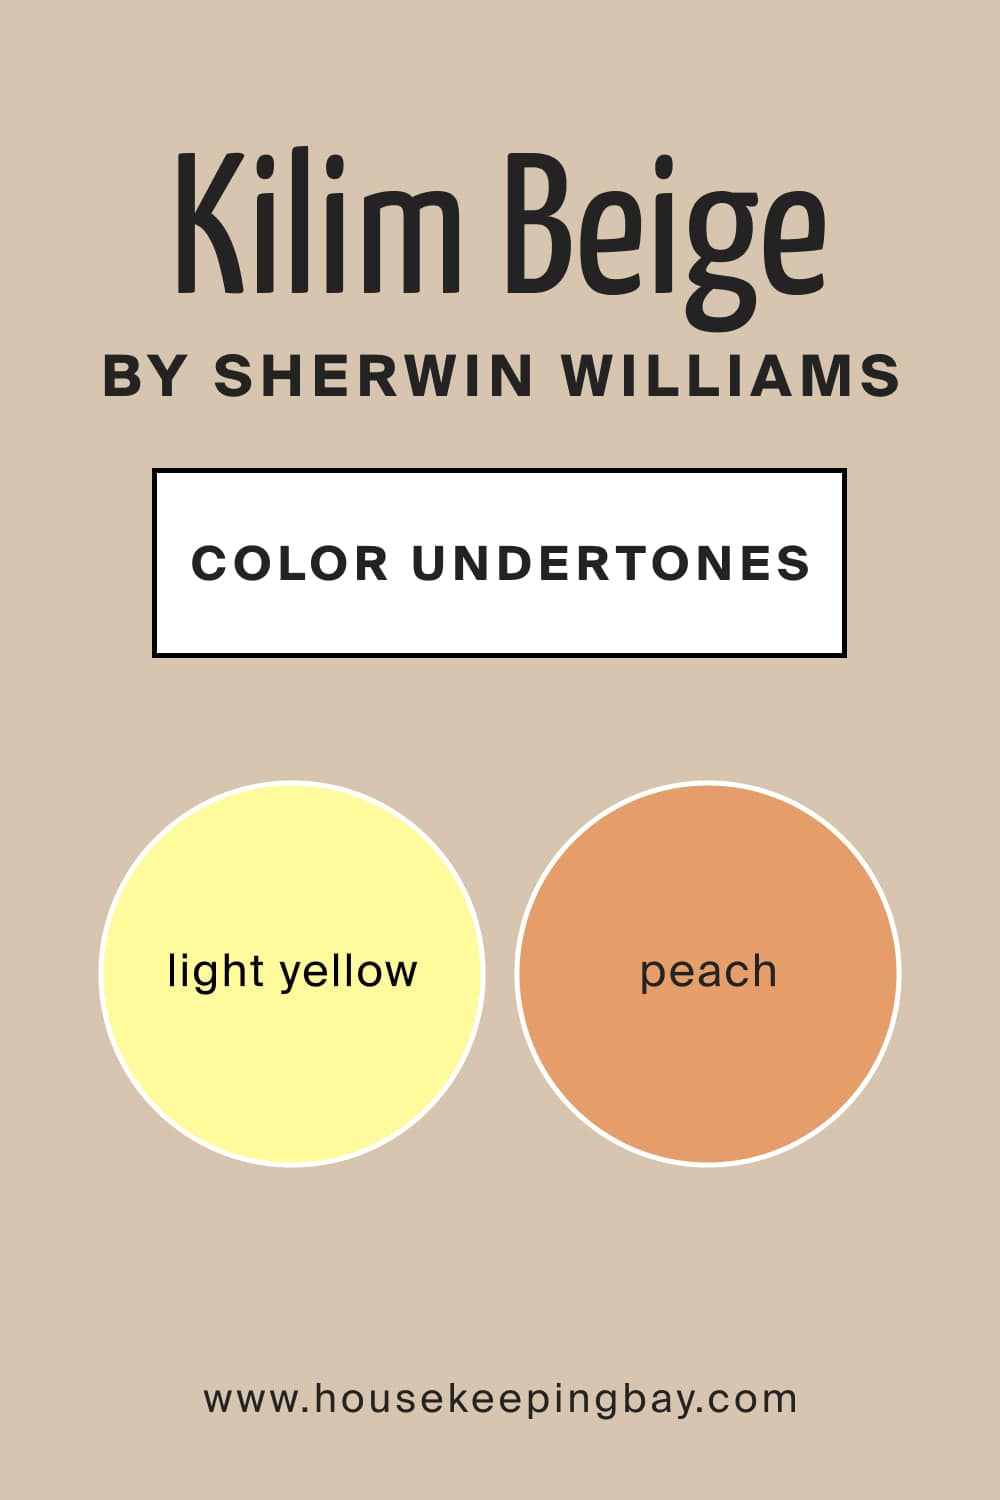 Kilim Beige SW 6106 by Sherwin Williams Color Undertones